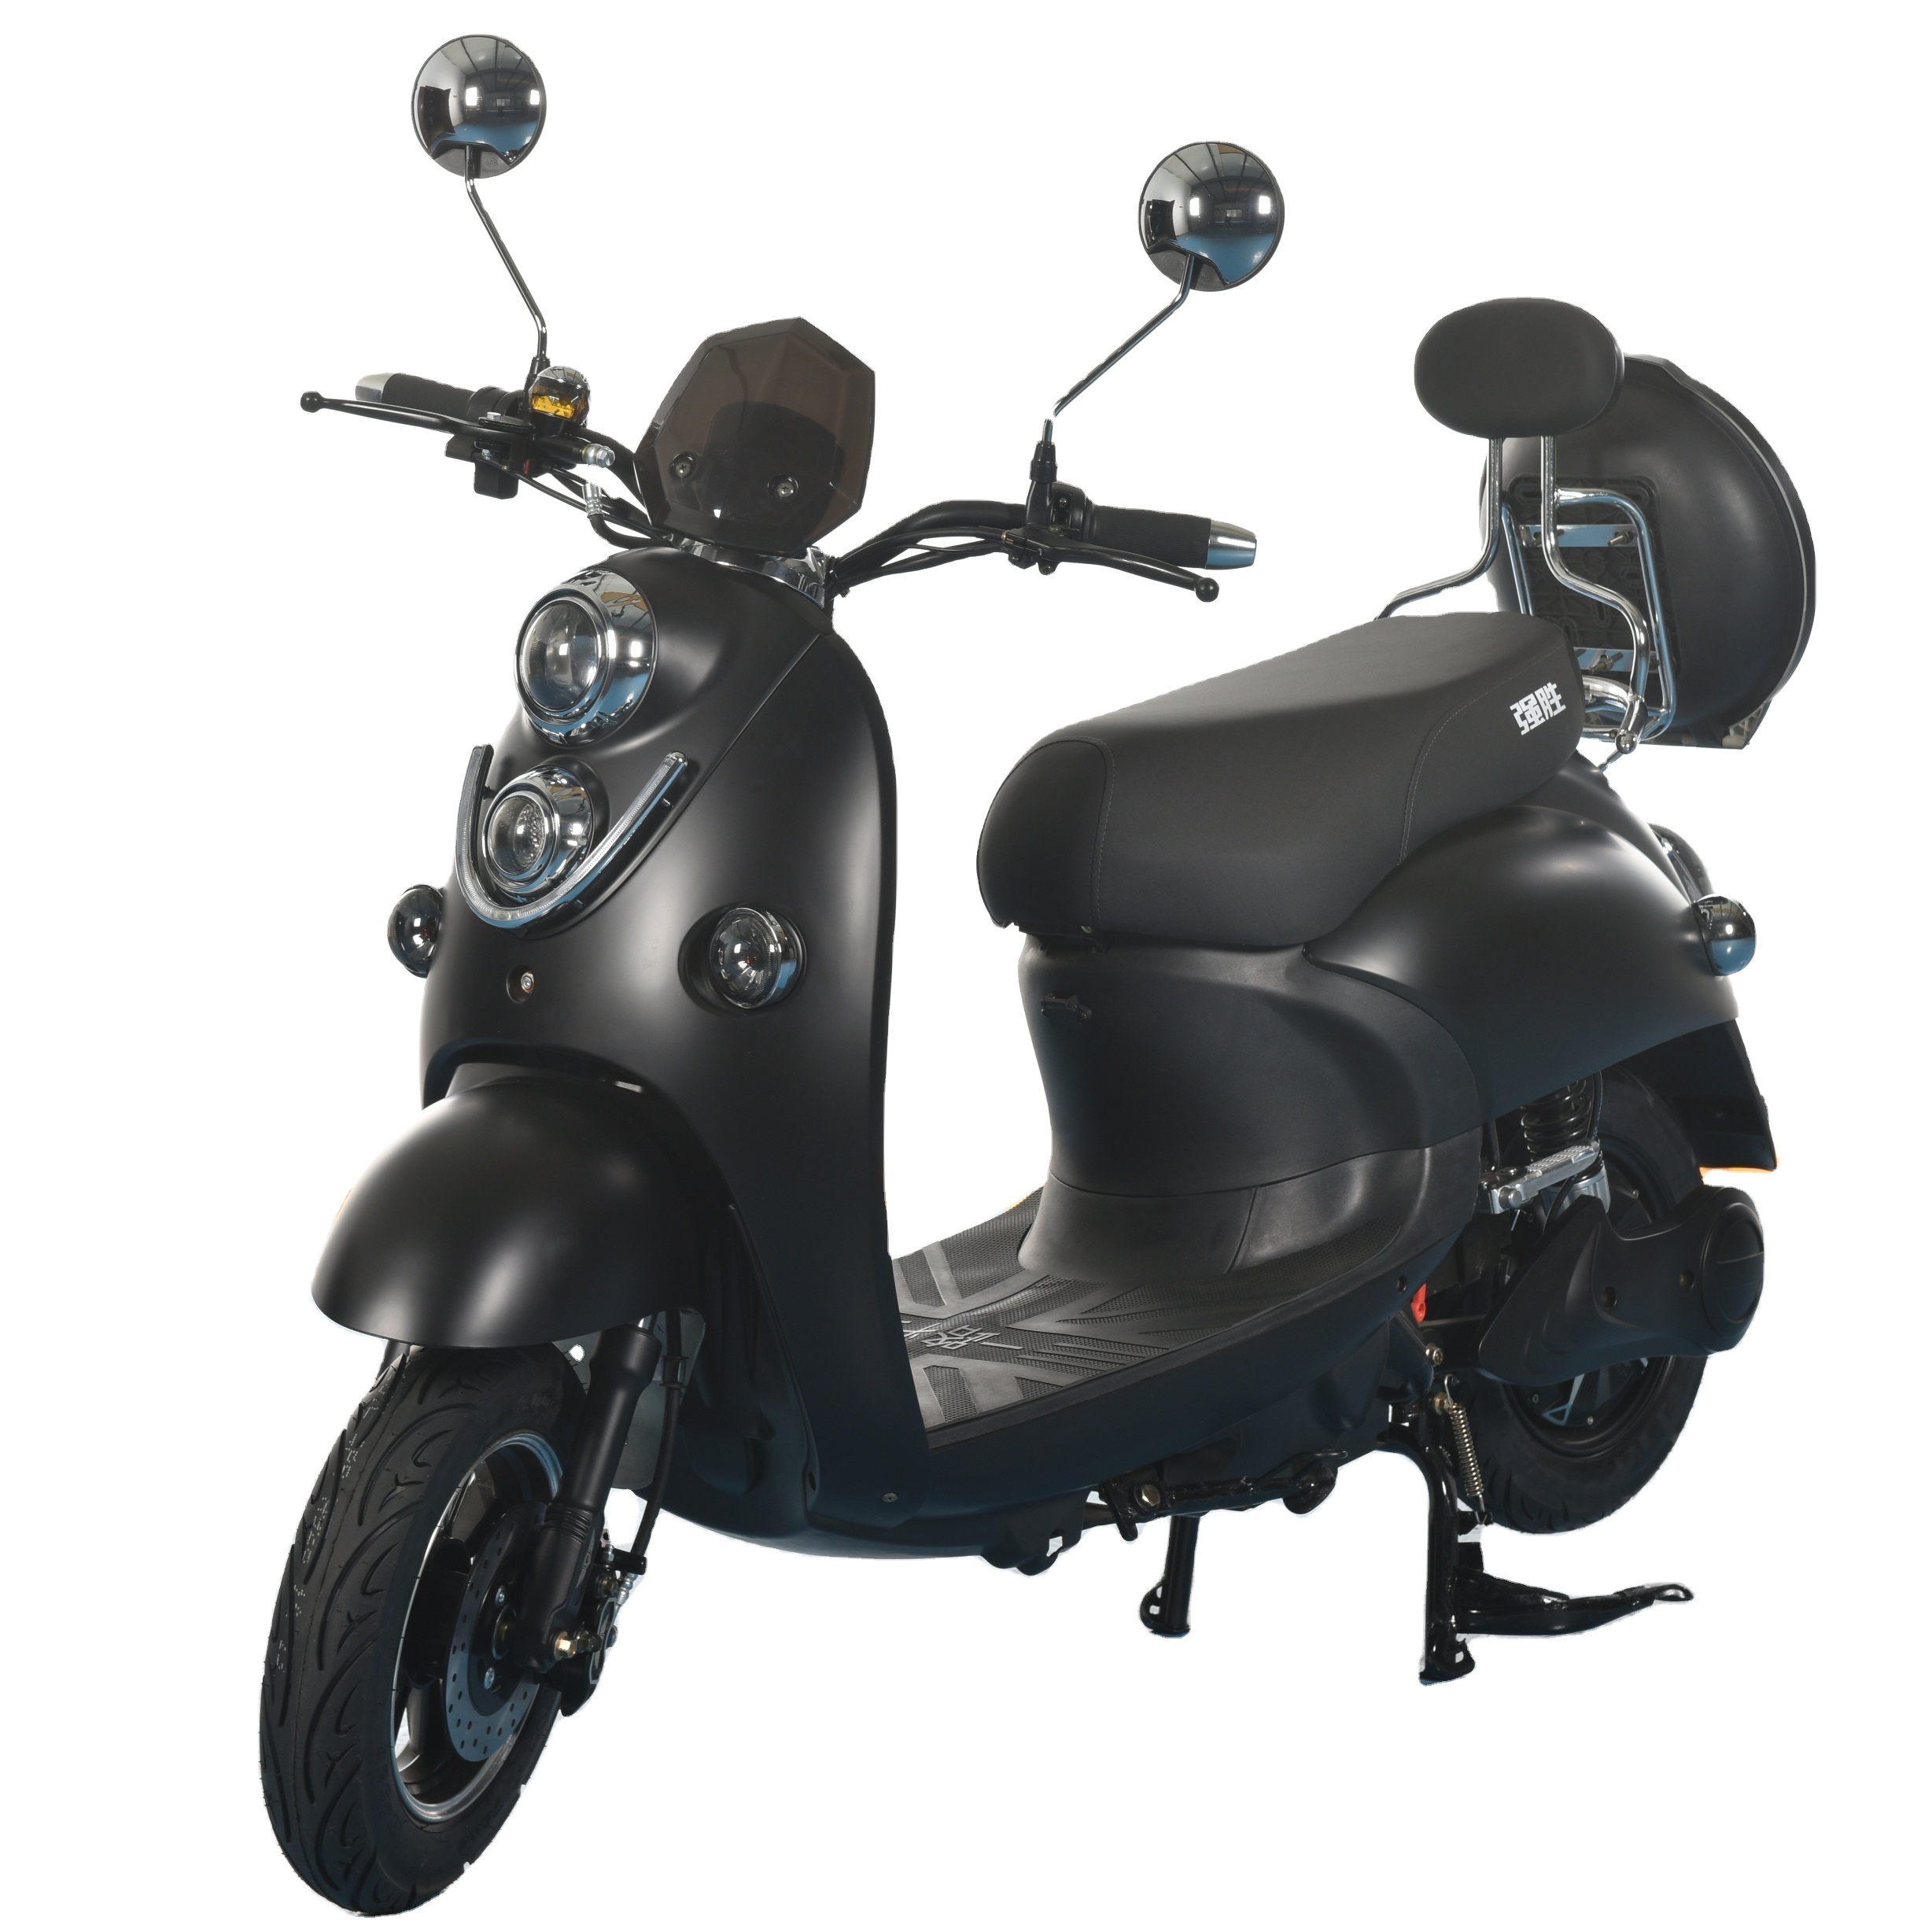 New model motor motorcycle power fat motorcycle motorized mini e scooter